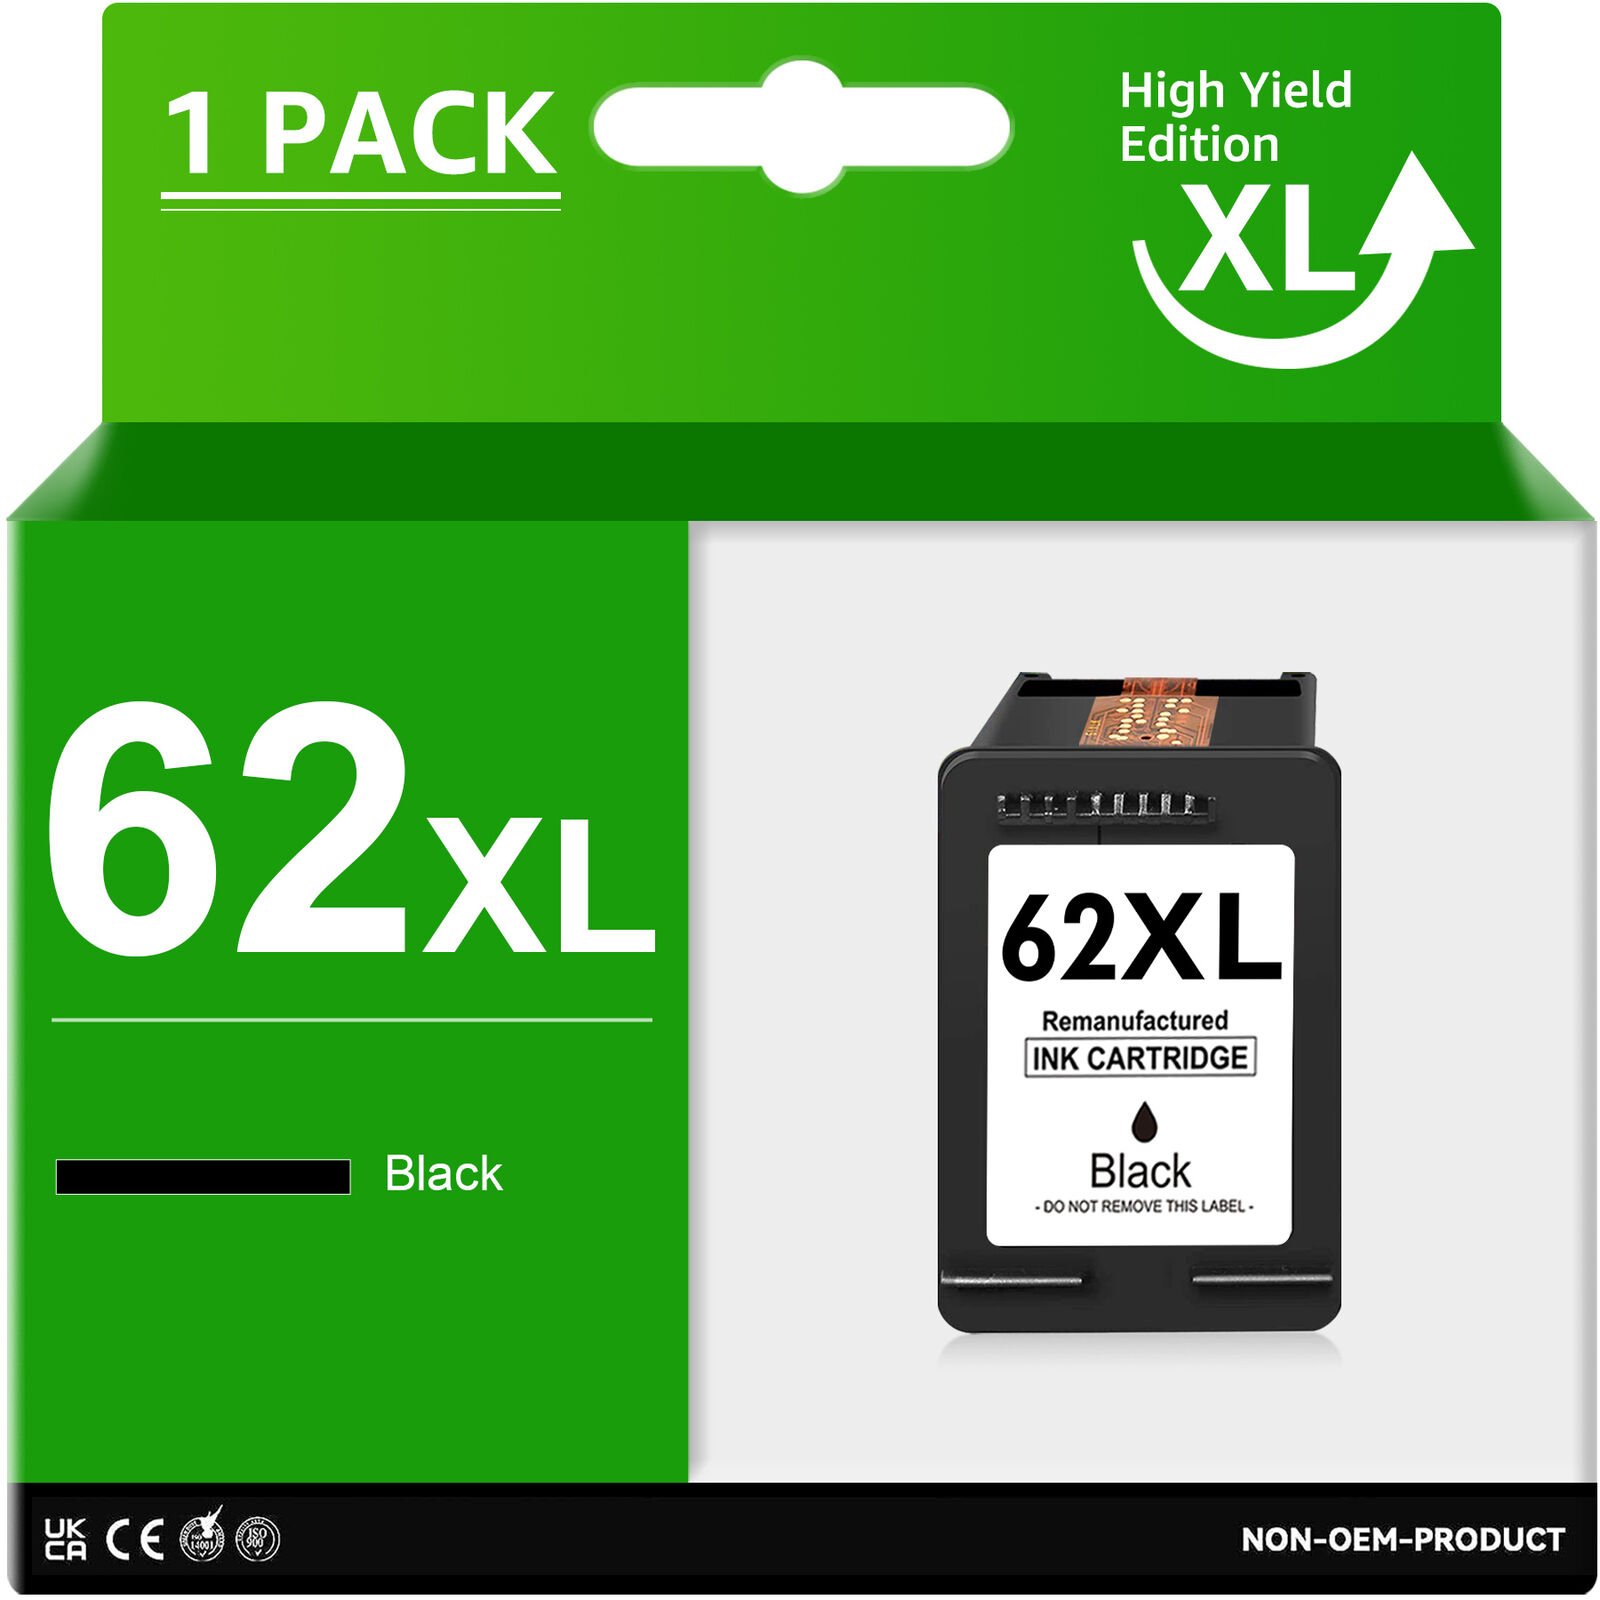 XXL 62XL Black Color Ink Cartridges for 62 HP Envy 5660 7640 7645 OfficeJet 5740